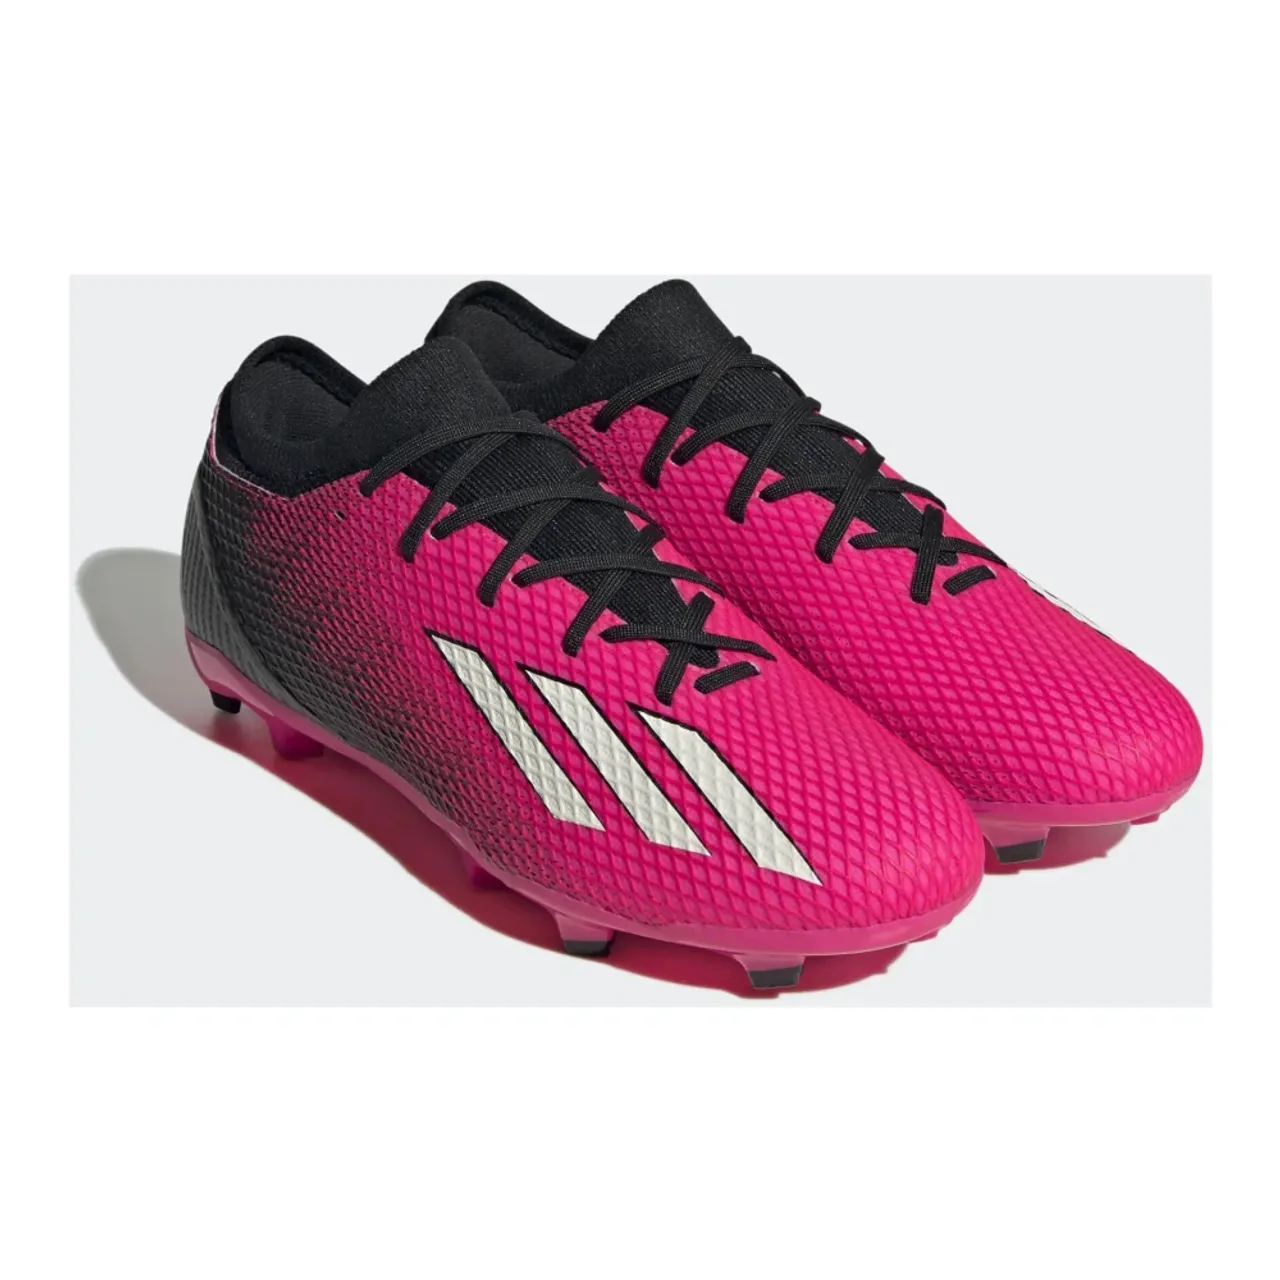 Adidas , SpeedPortal.3 FG Football Boot ,Pink male, Sizes: